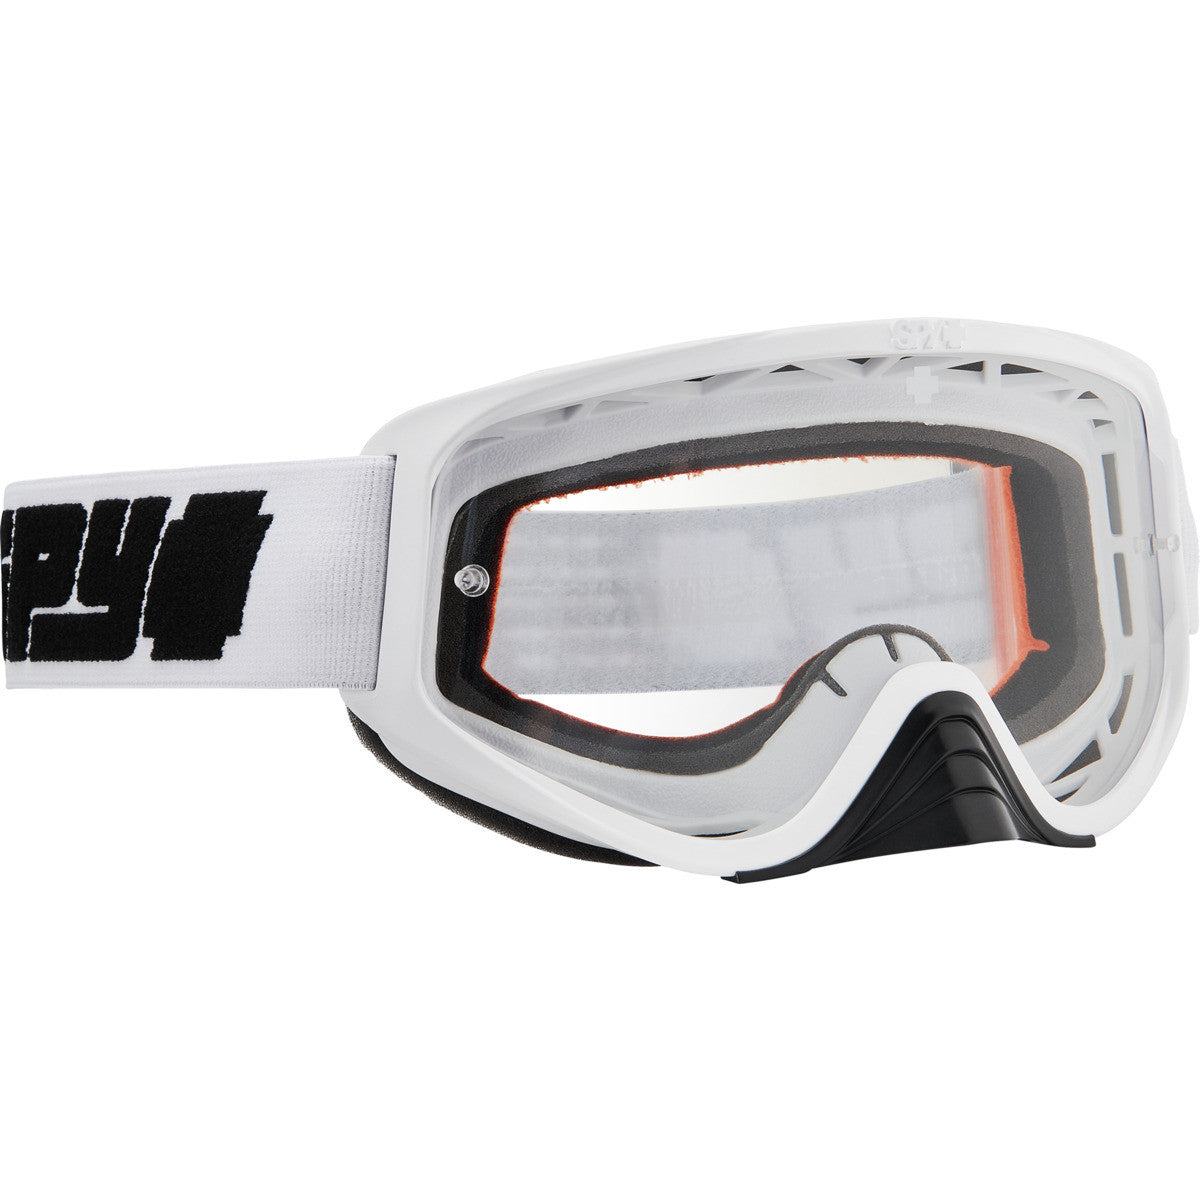 Spy WOOT Goggles  Reverb Contrast Small, Small-Medium, Medium, Medium-Large M 56-58